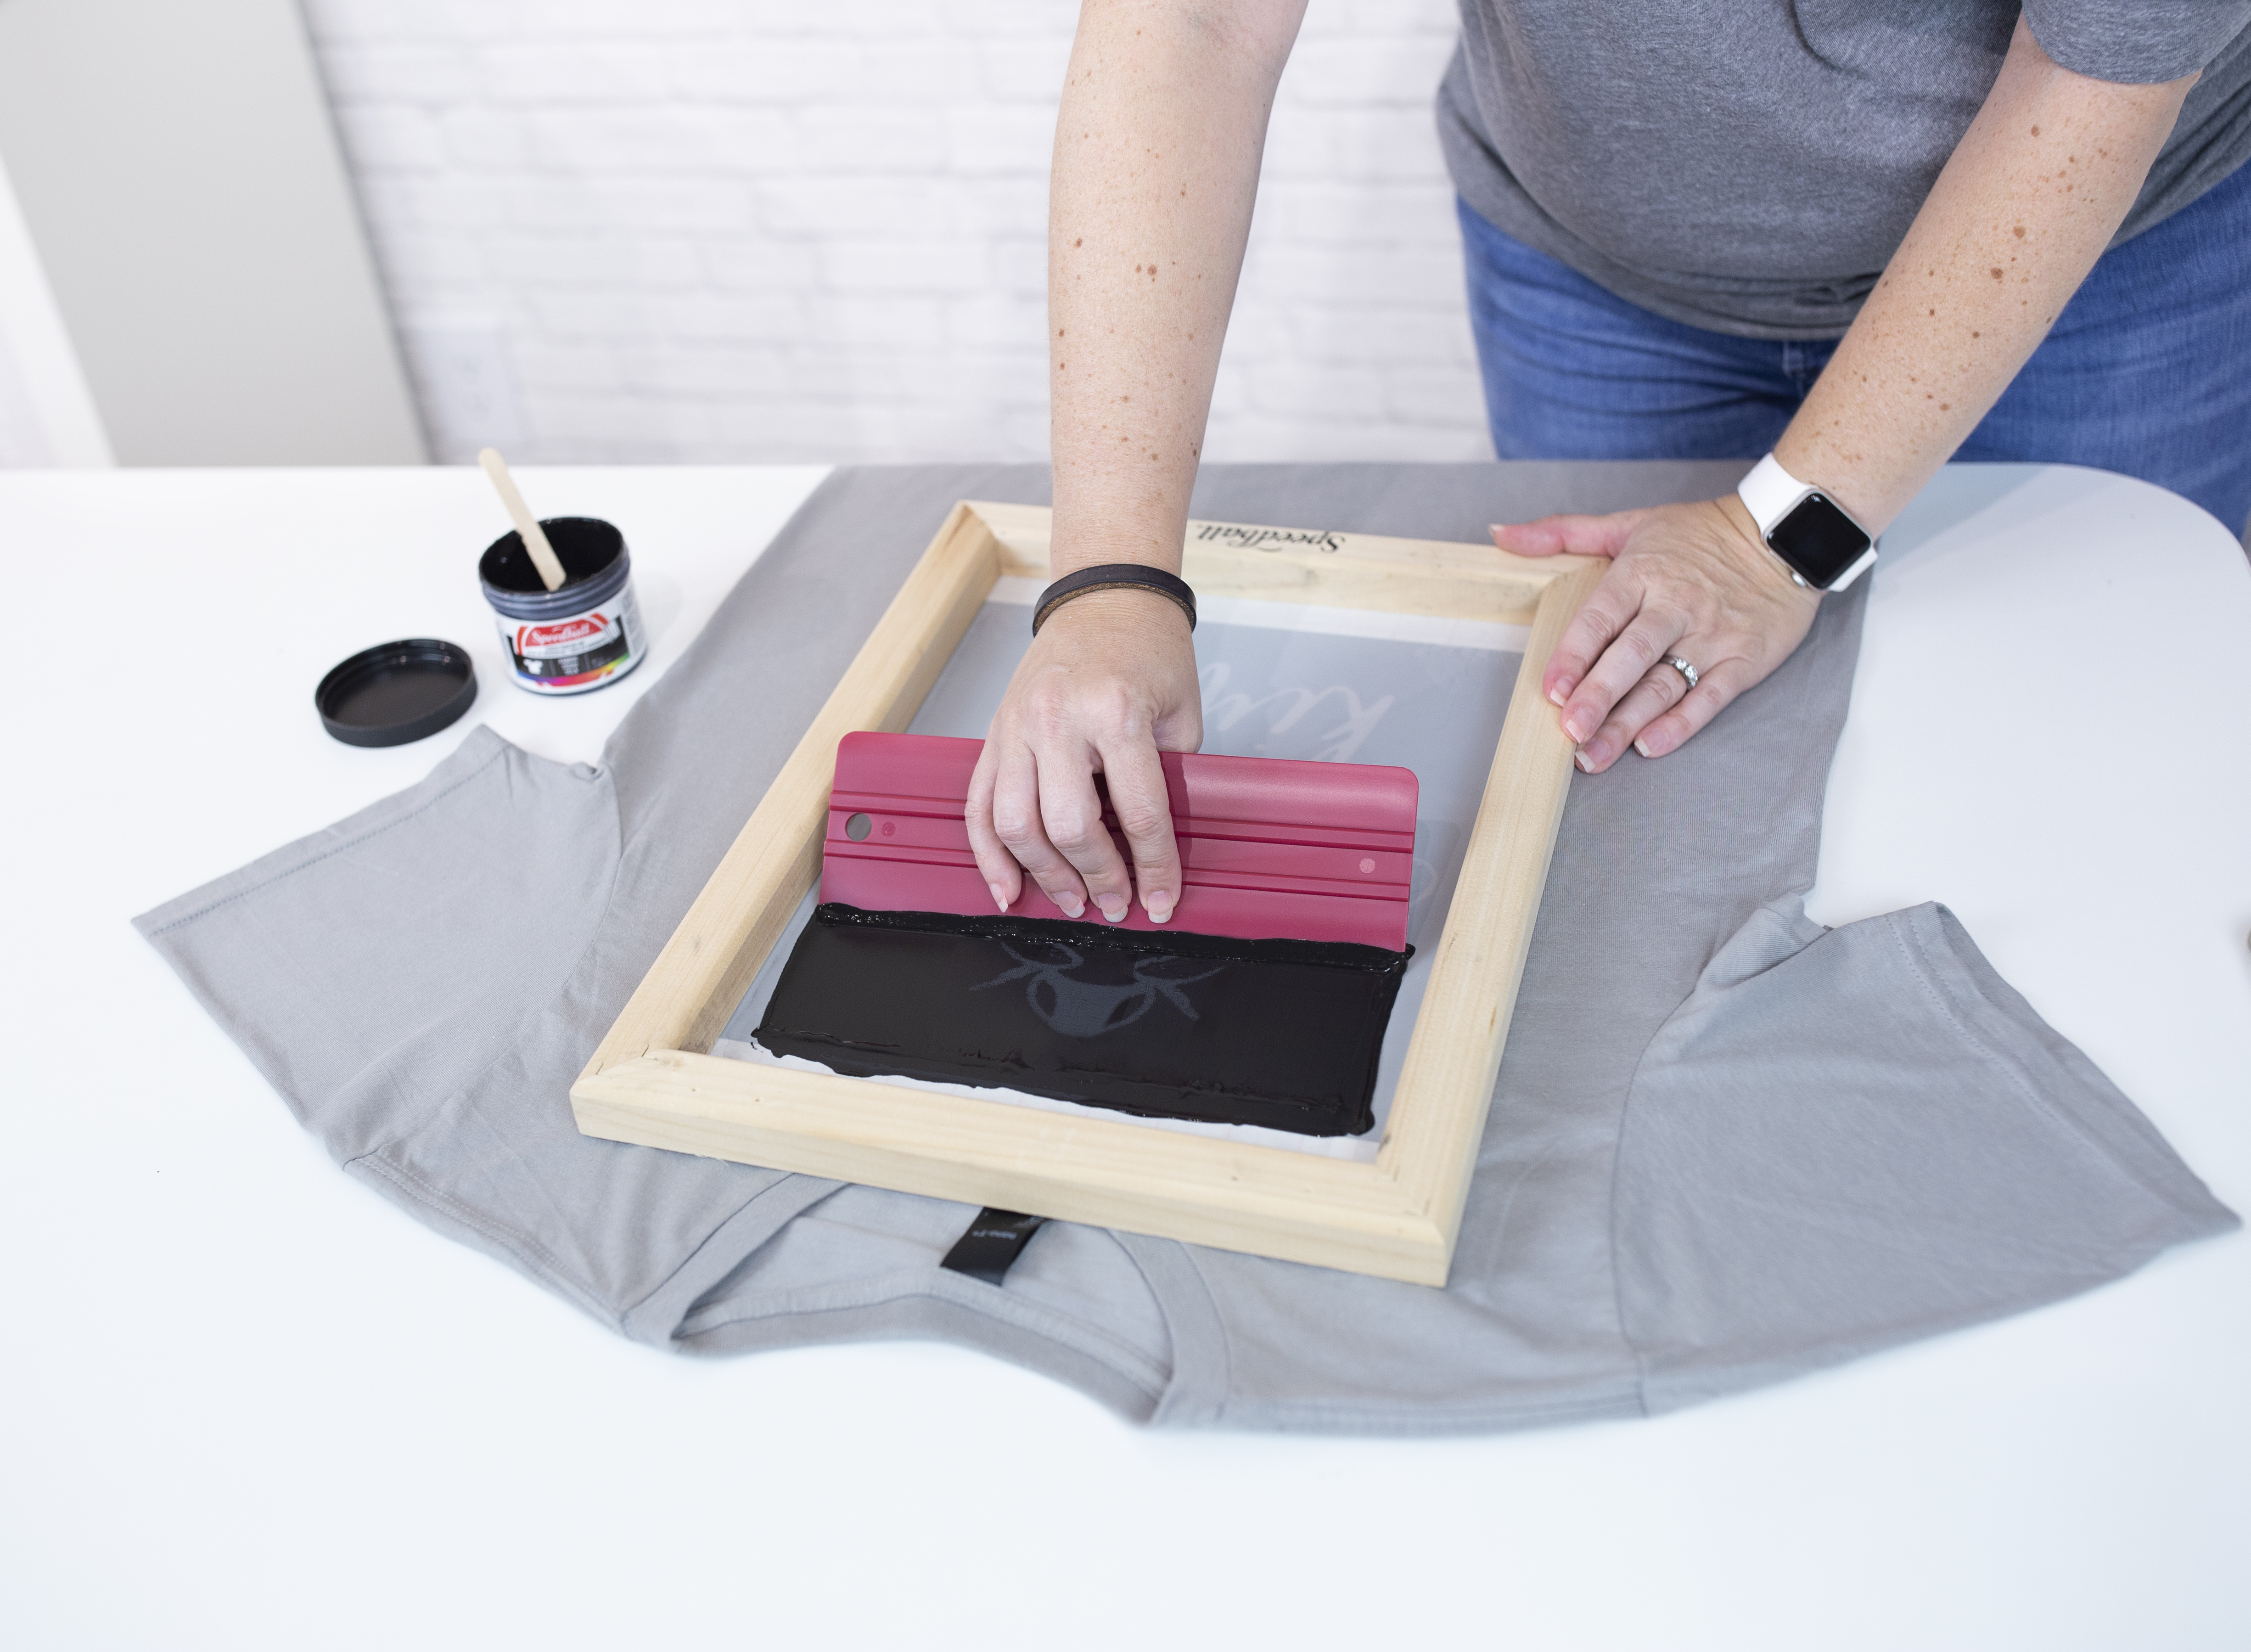 Speedball Fabric Screen Printing Ink Sets – EZScreenPrint